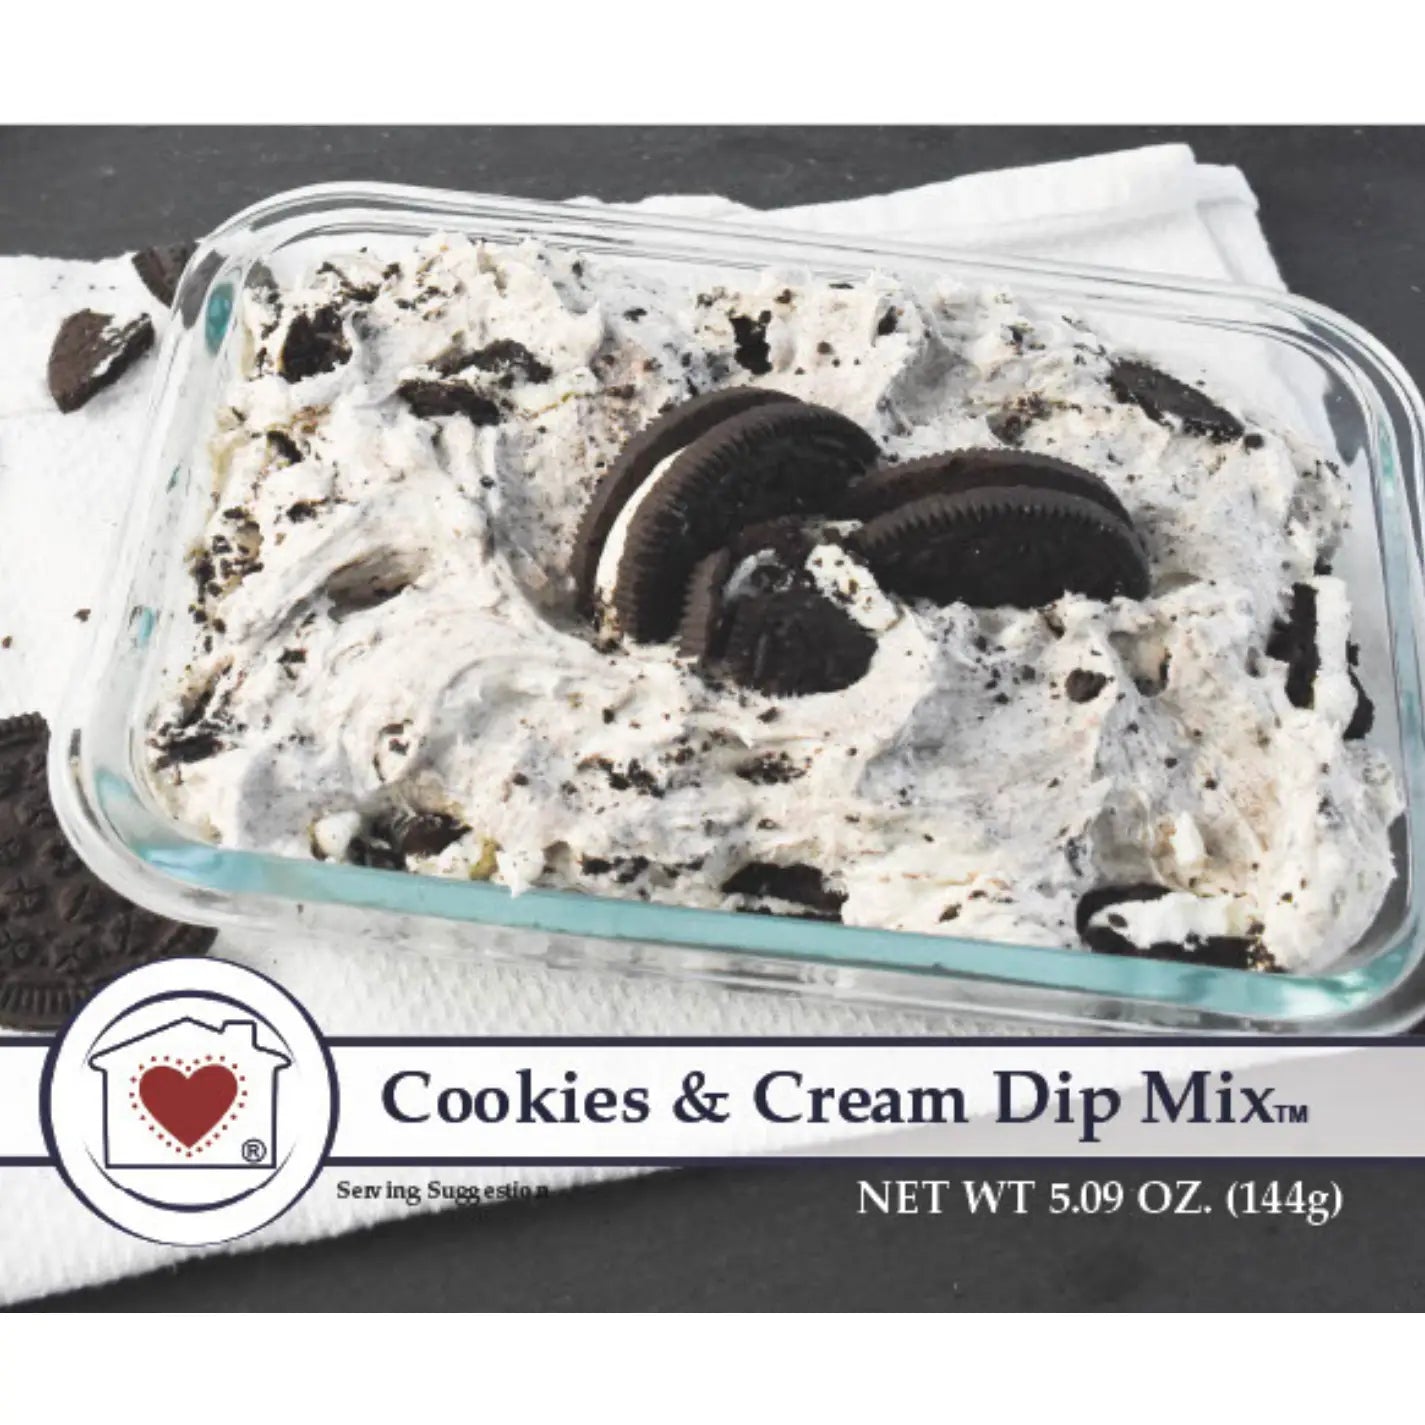 Cookies & Cream Dip Mix